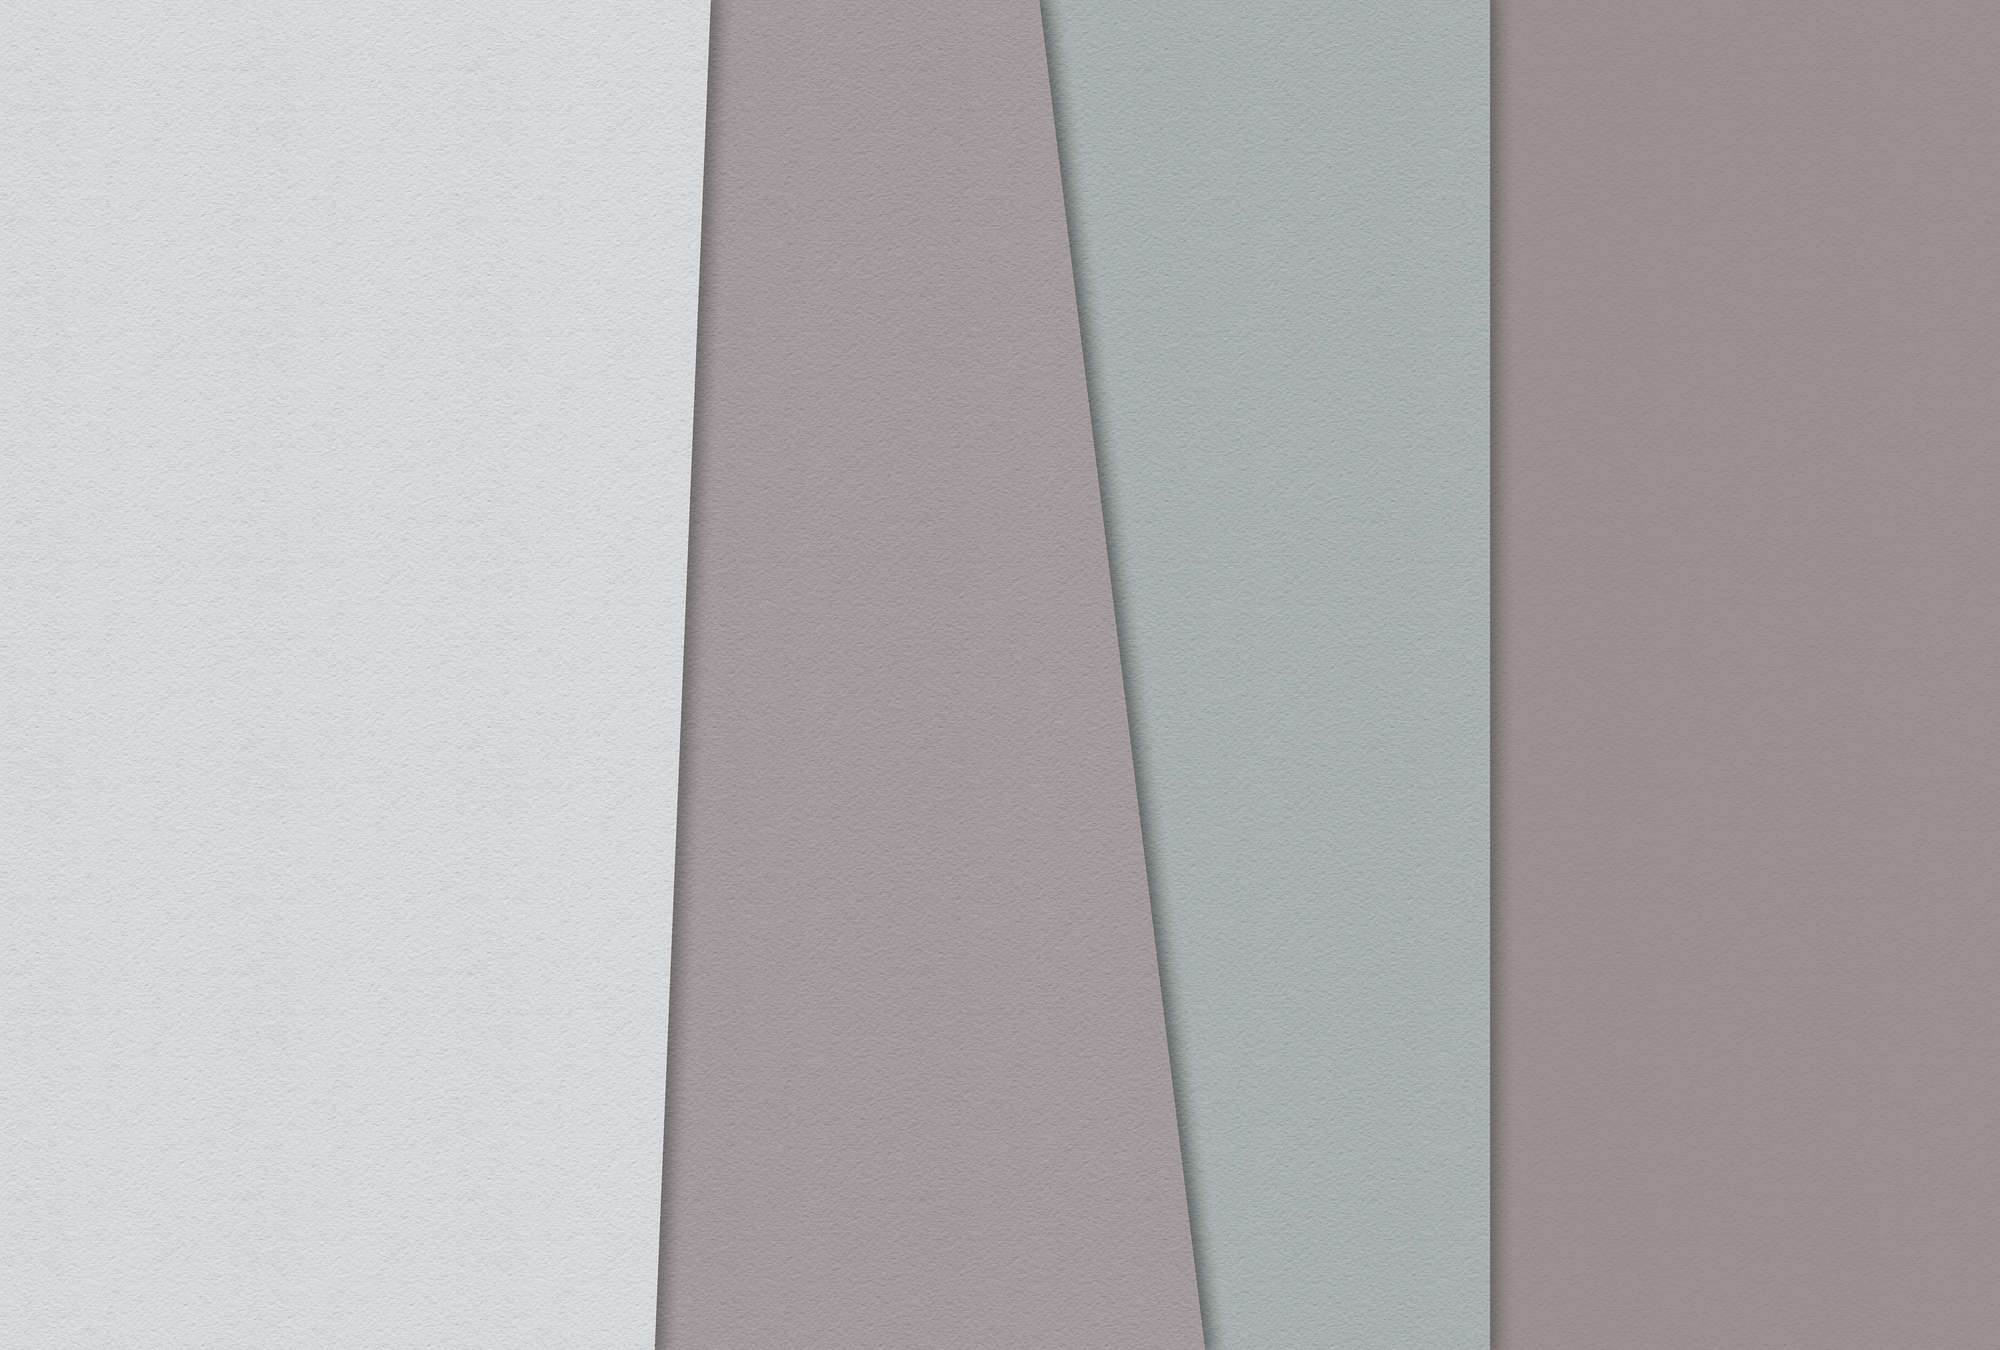             Layered paper 3 - Minimalistische Fototapete Farbfelder-Büttenpapier Struktur – Blau, Creme | Premium Glattvlies
        